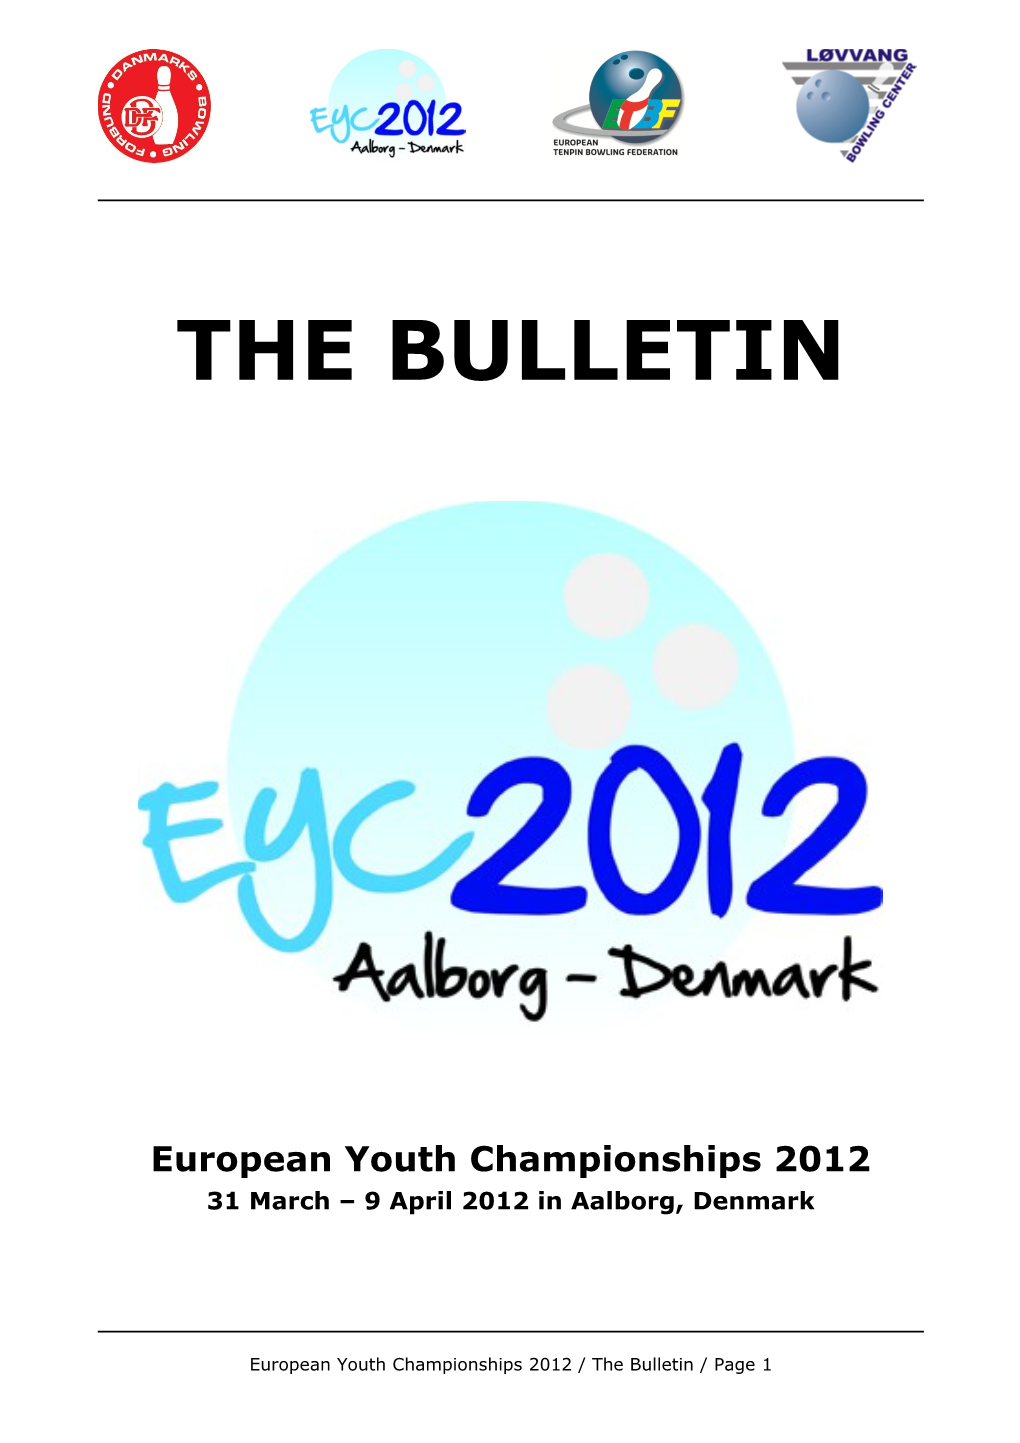 European Youthchampionships 2012: the Bulletin